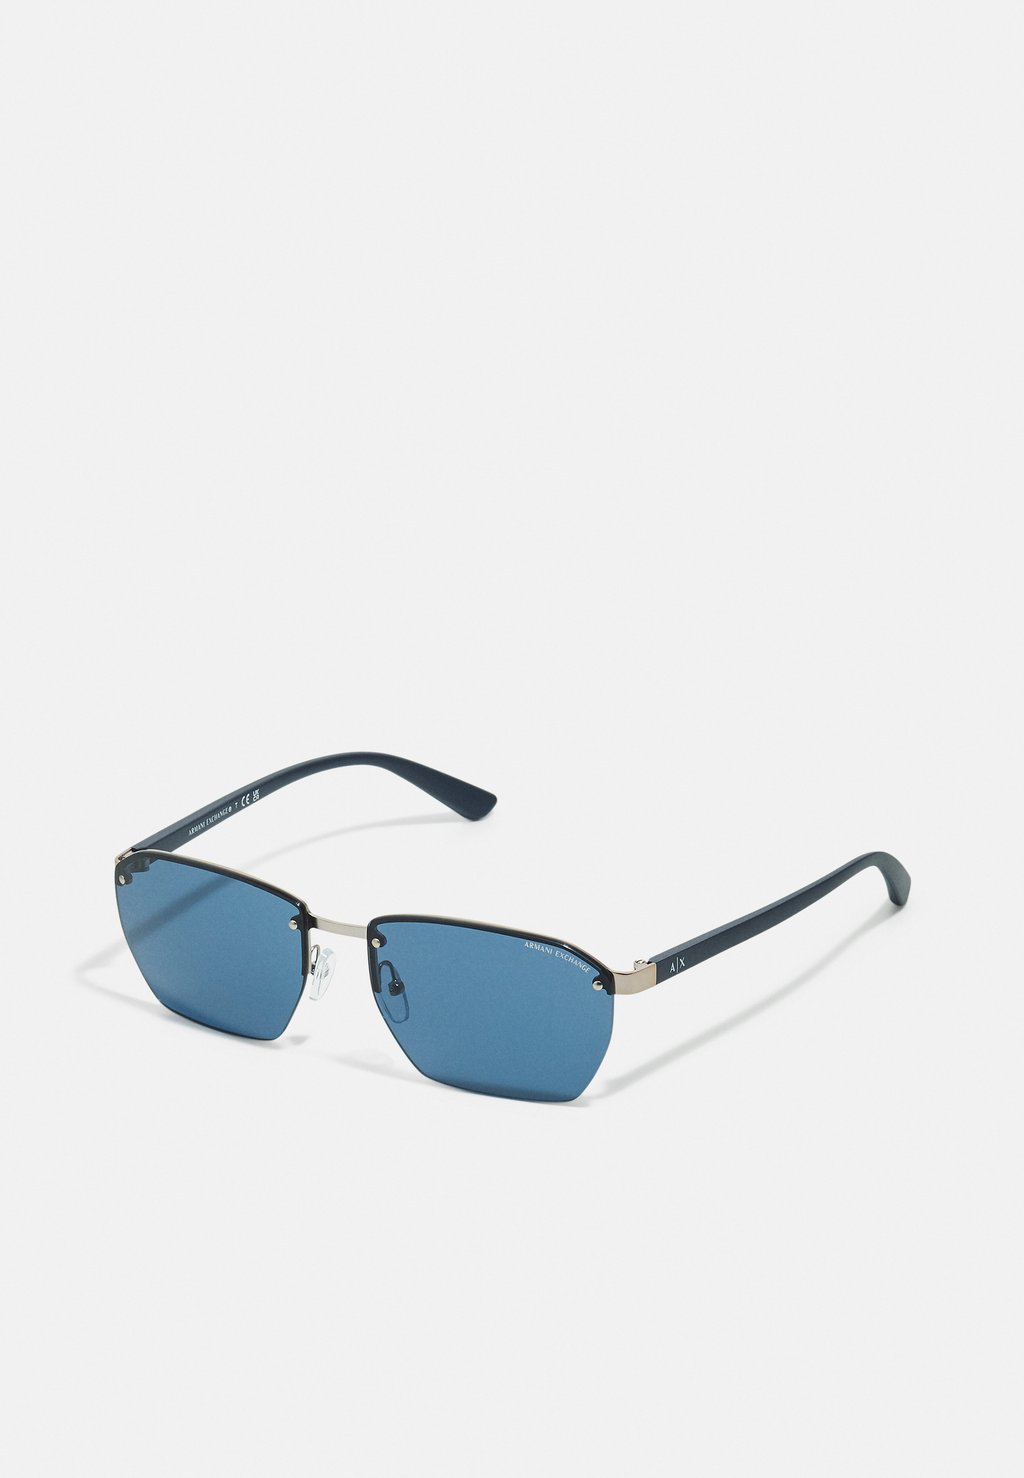 цена Солнцезащитные очки Armani Exchange, матовое серебро